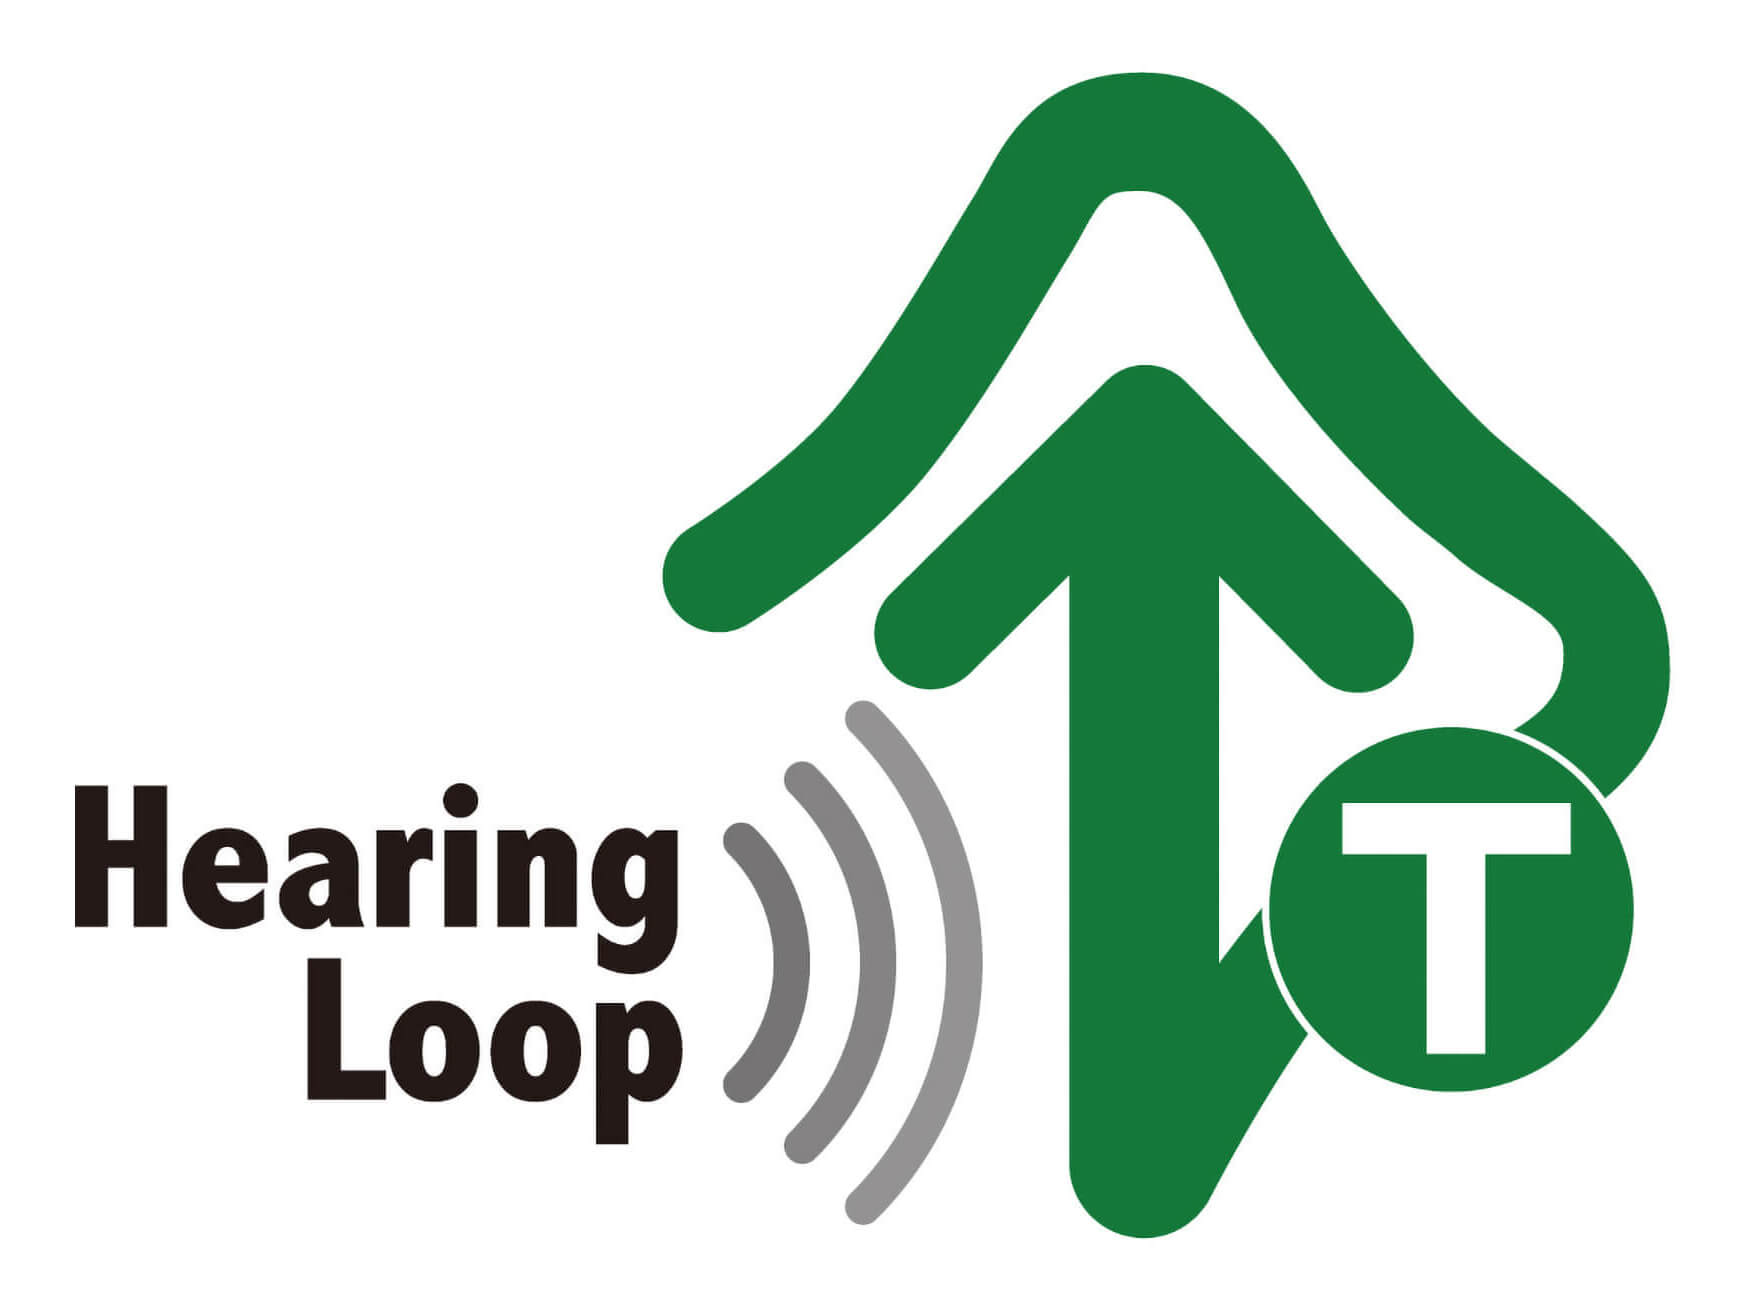 Hearing loop mark